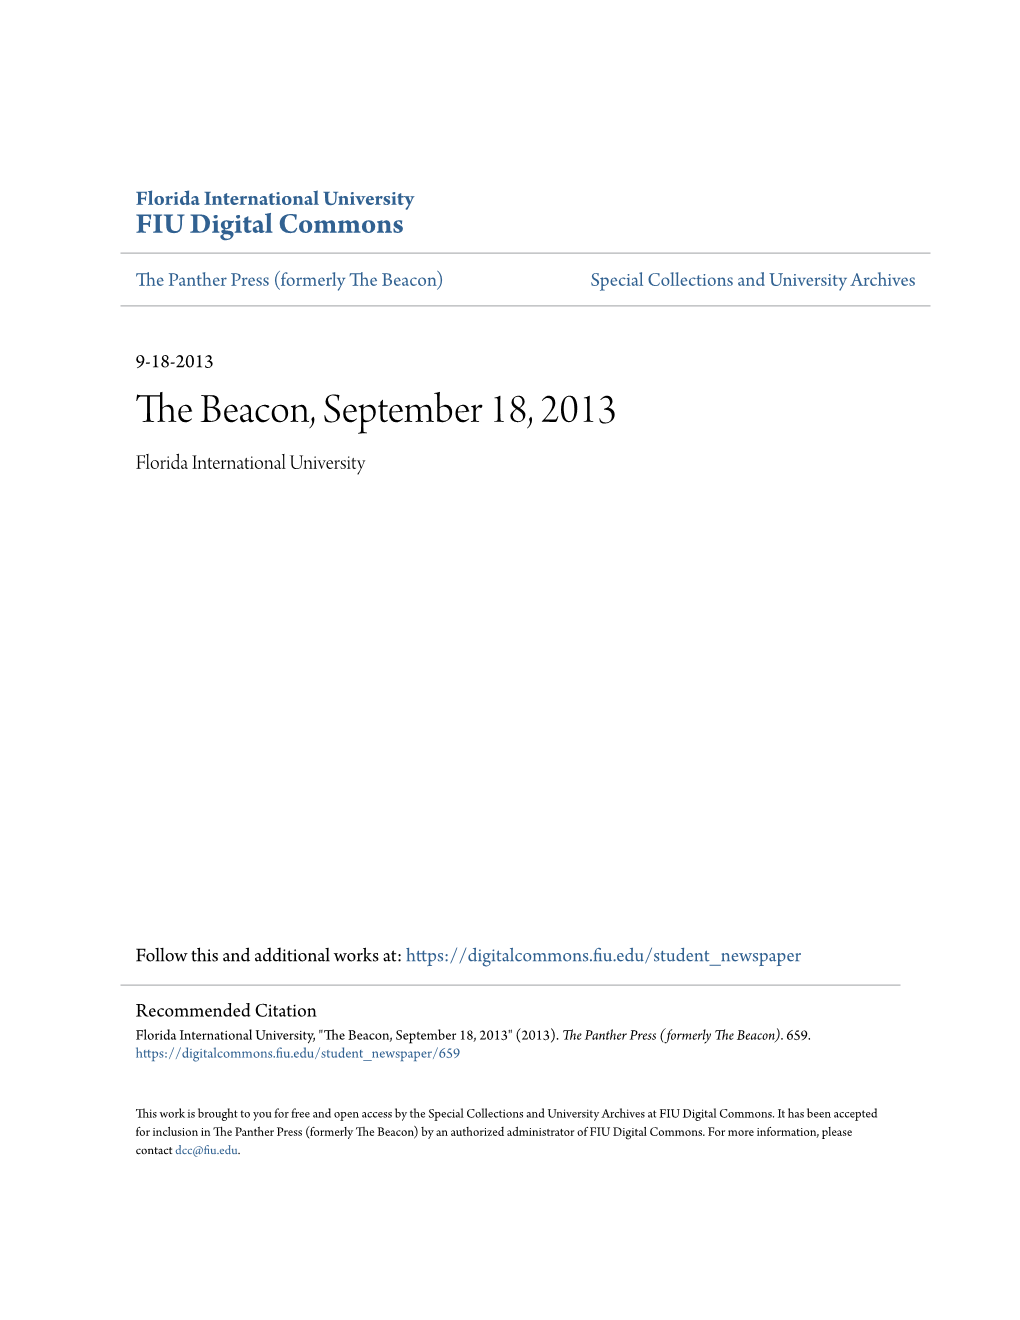 The Beacon, September 18, 2013 Florida International University